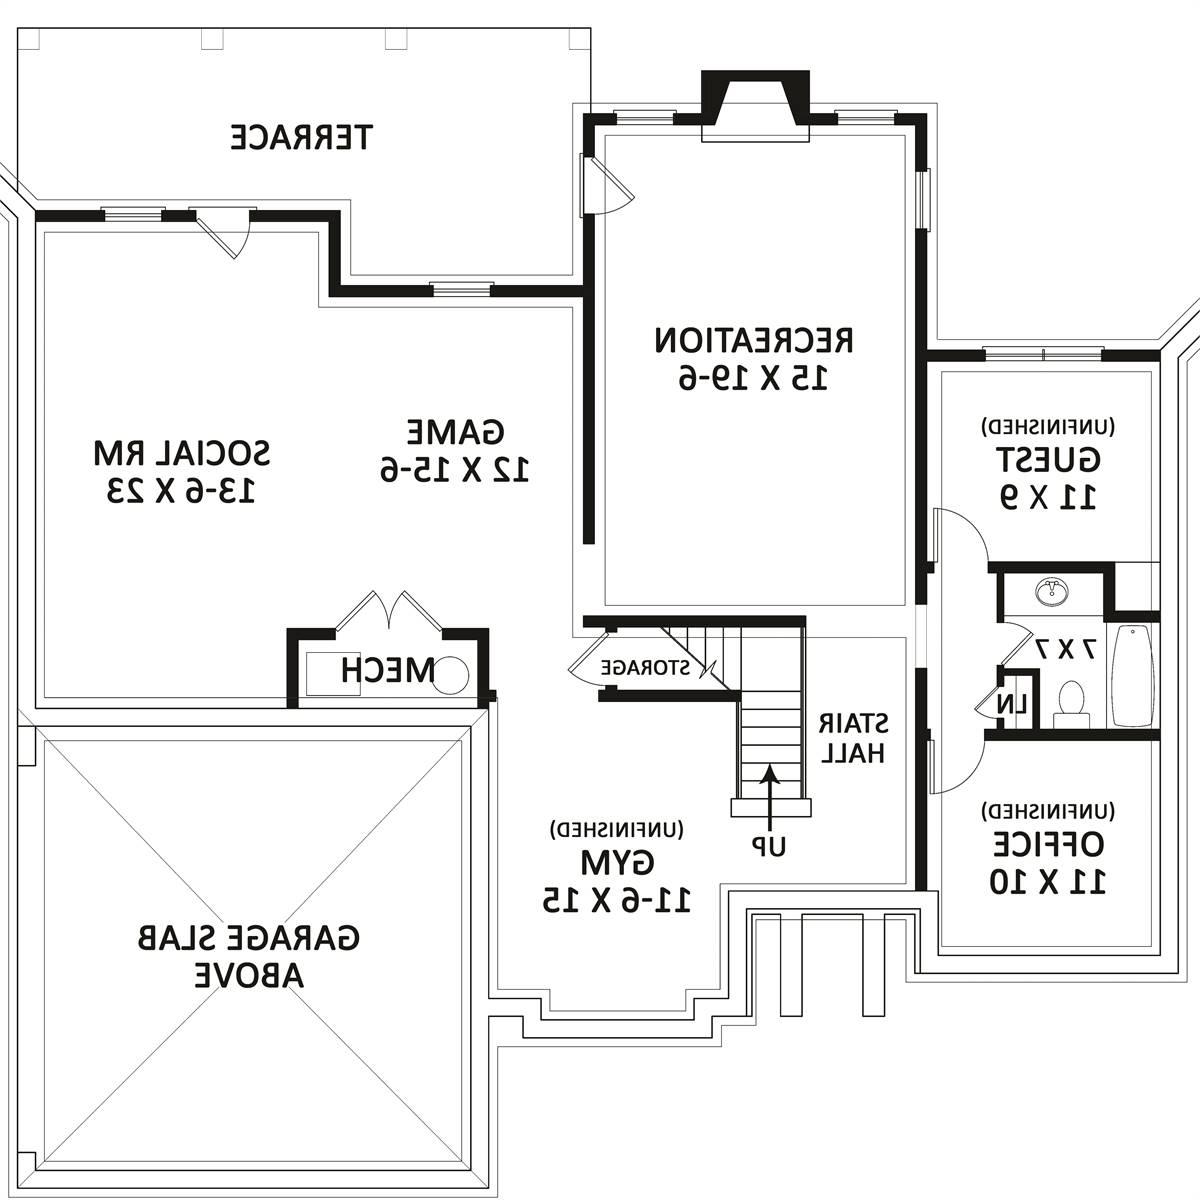 Basement Plan image of Linnwood House Plan